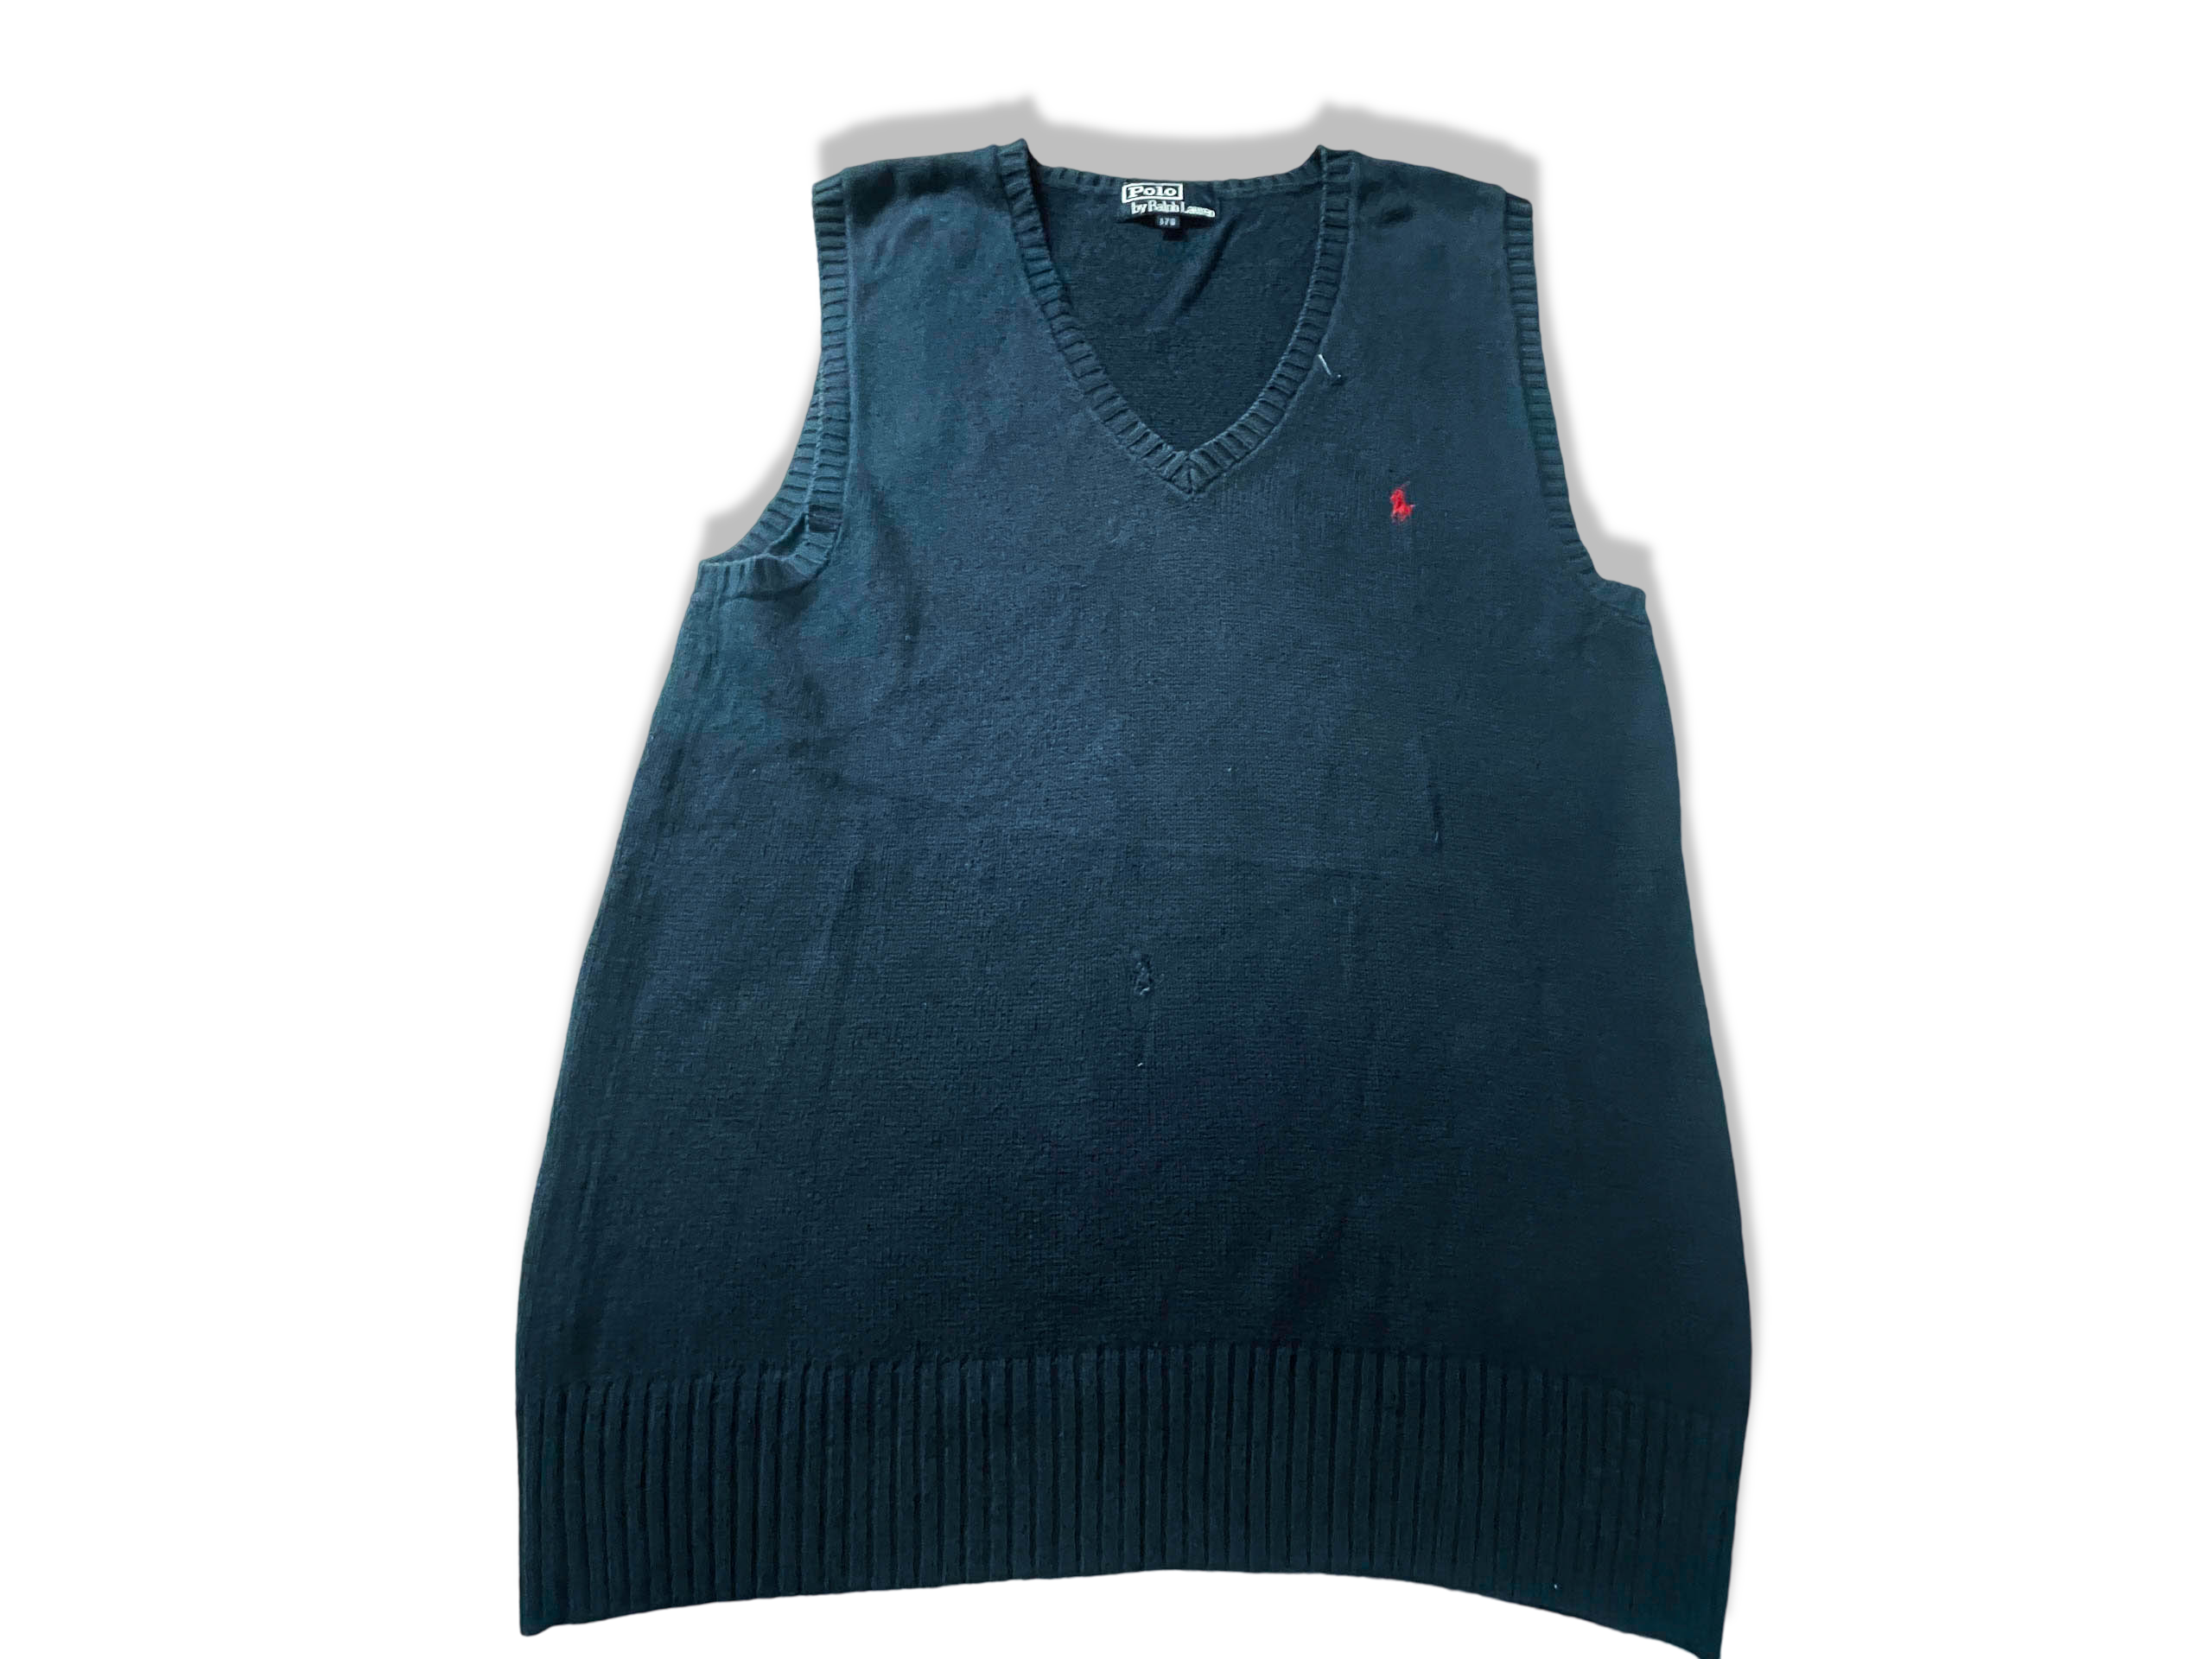 Vintage Blue men's Polo Ralph Lauren sleeveless cardigan in S/M|L26W16|SKU 3927